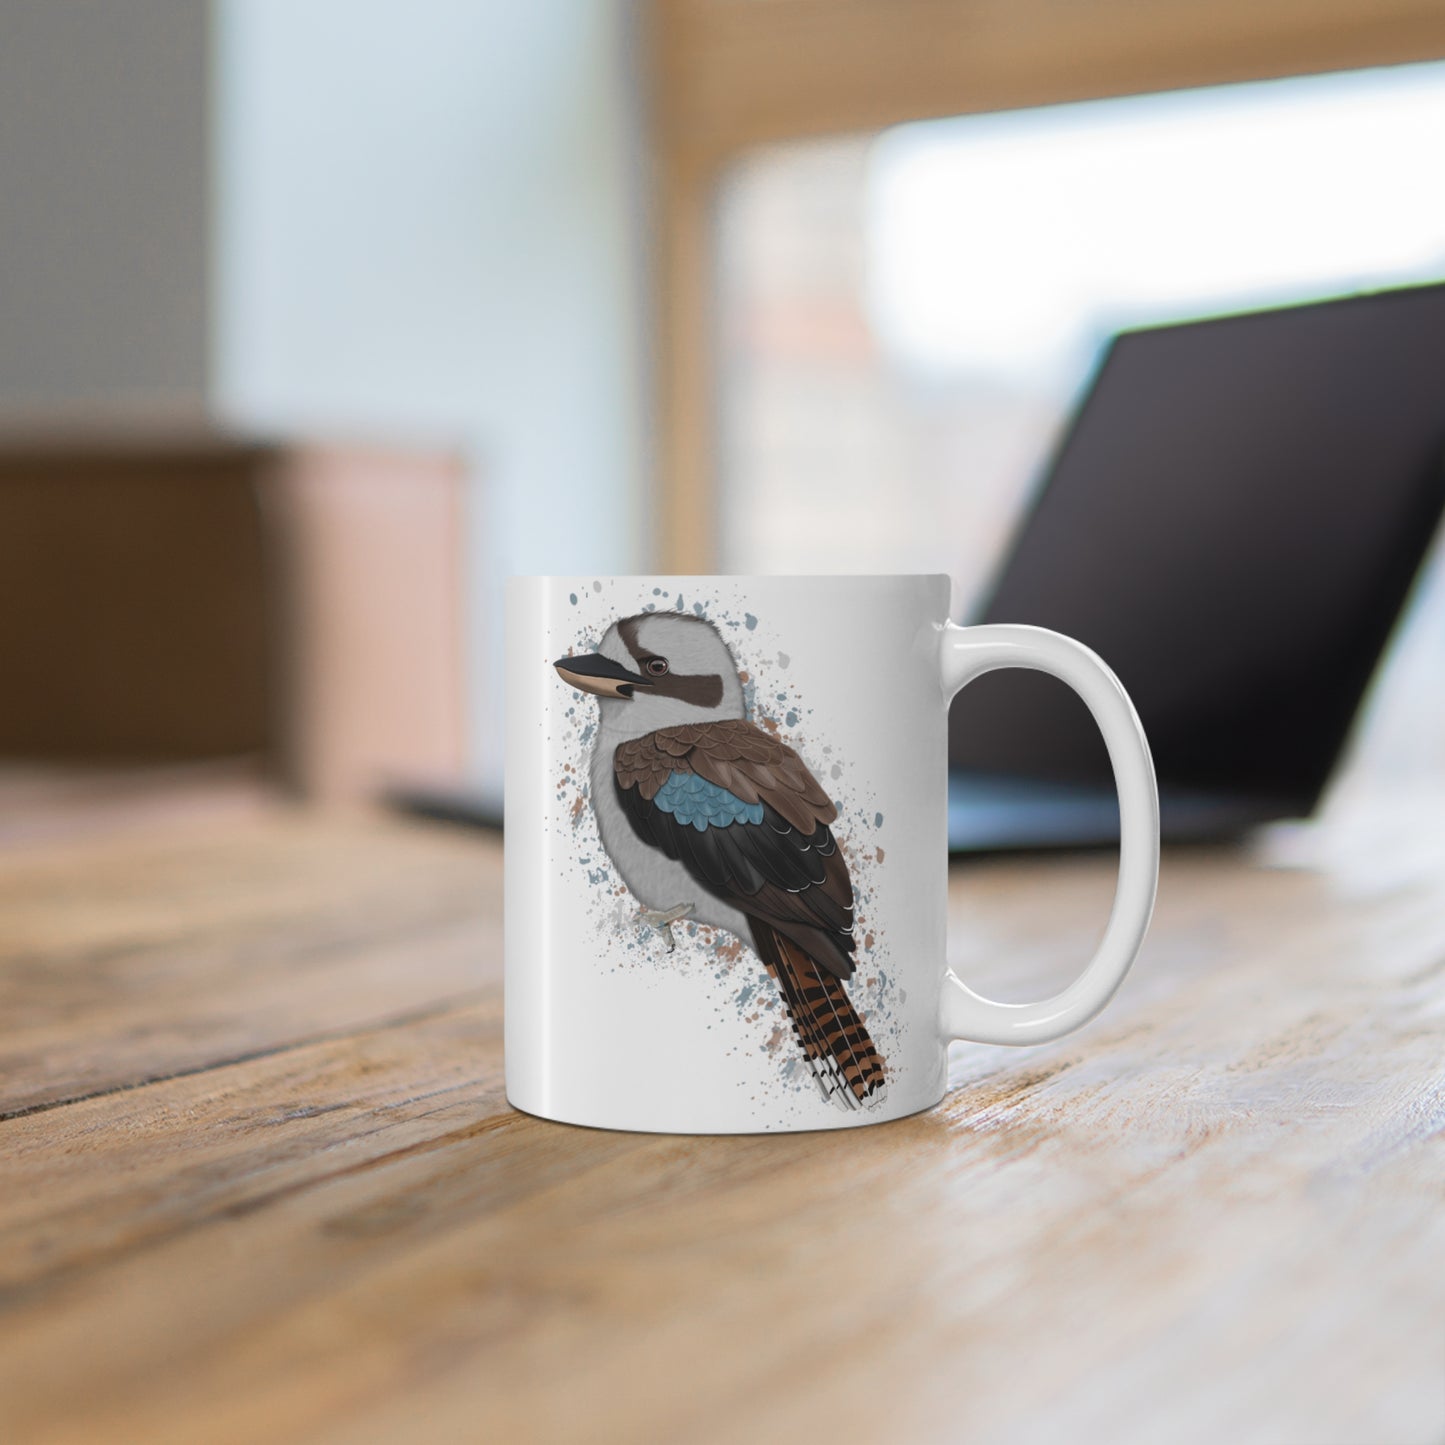 Kookaburra Bird Ceramic Mug 11oz White